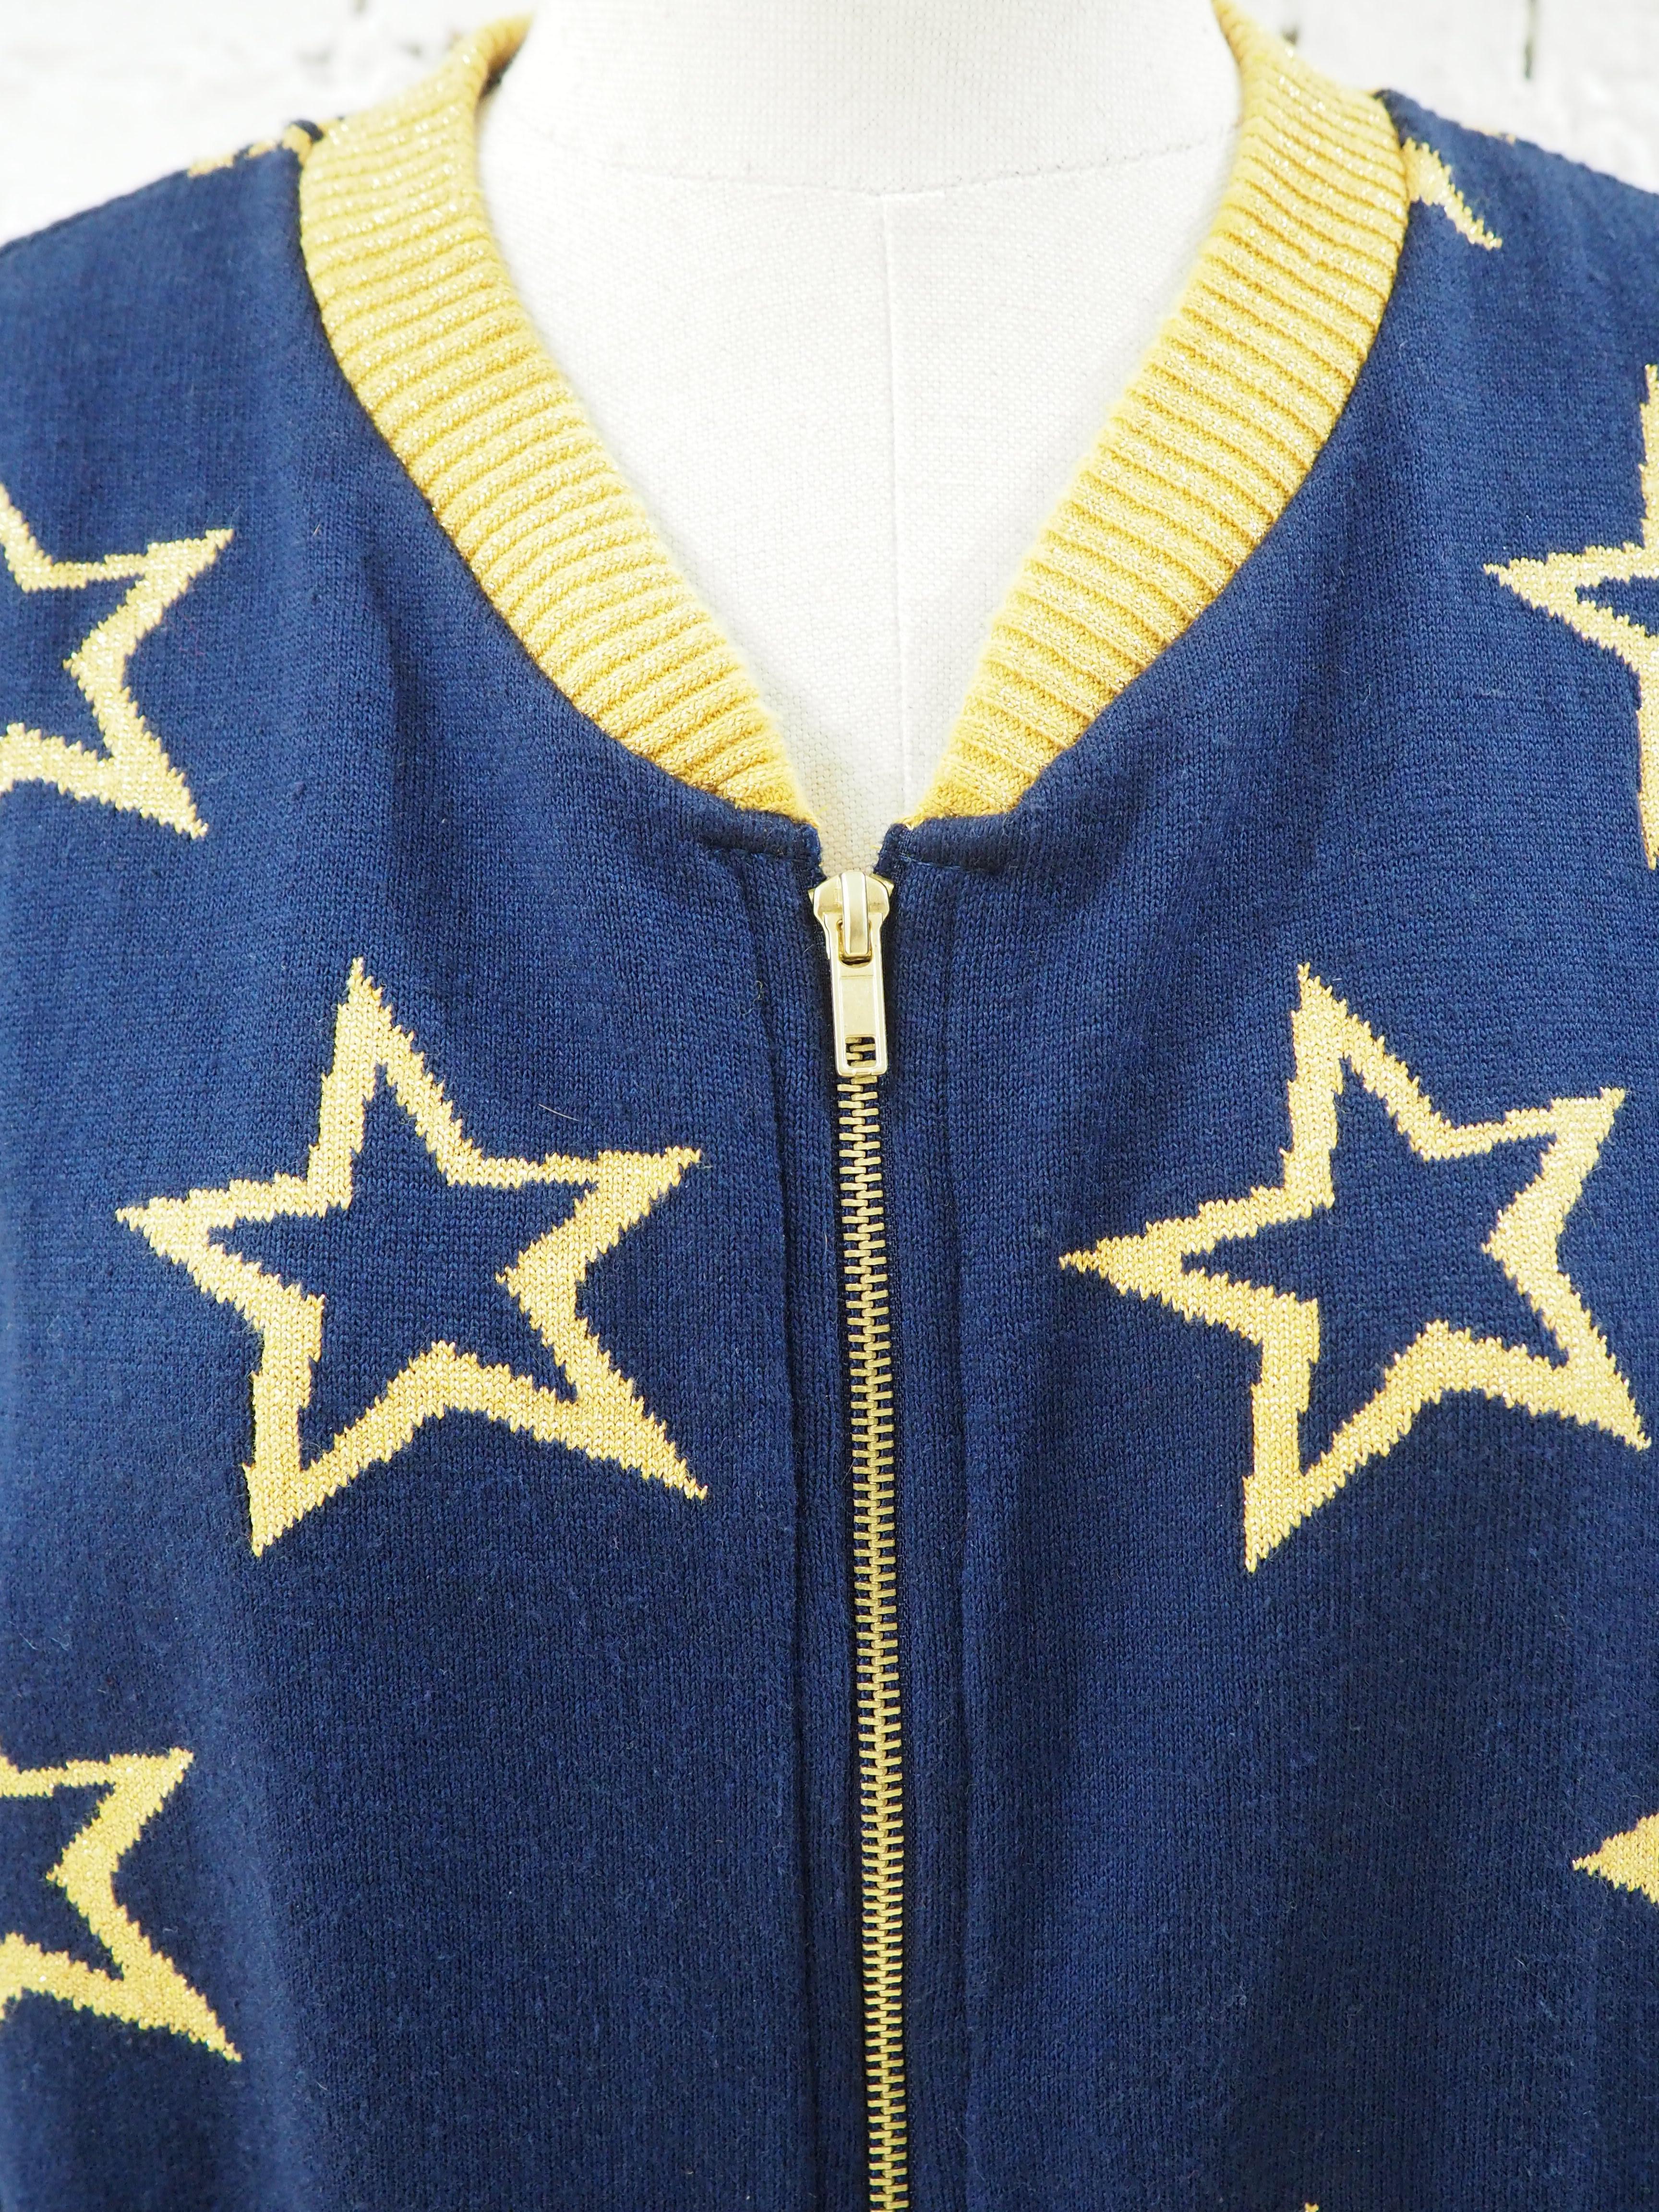 Women's or Men's Kueen blue yellow sweater - cardigan